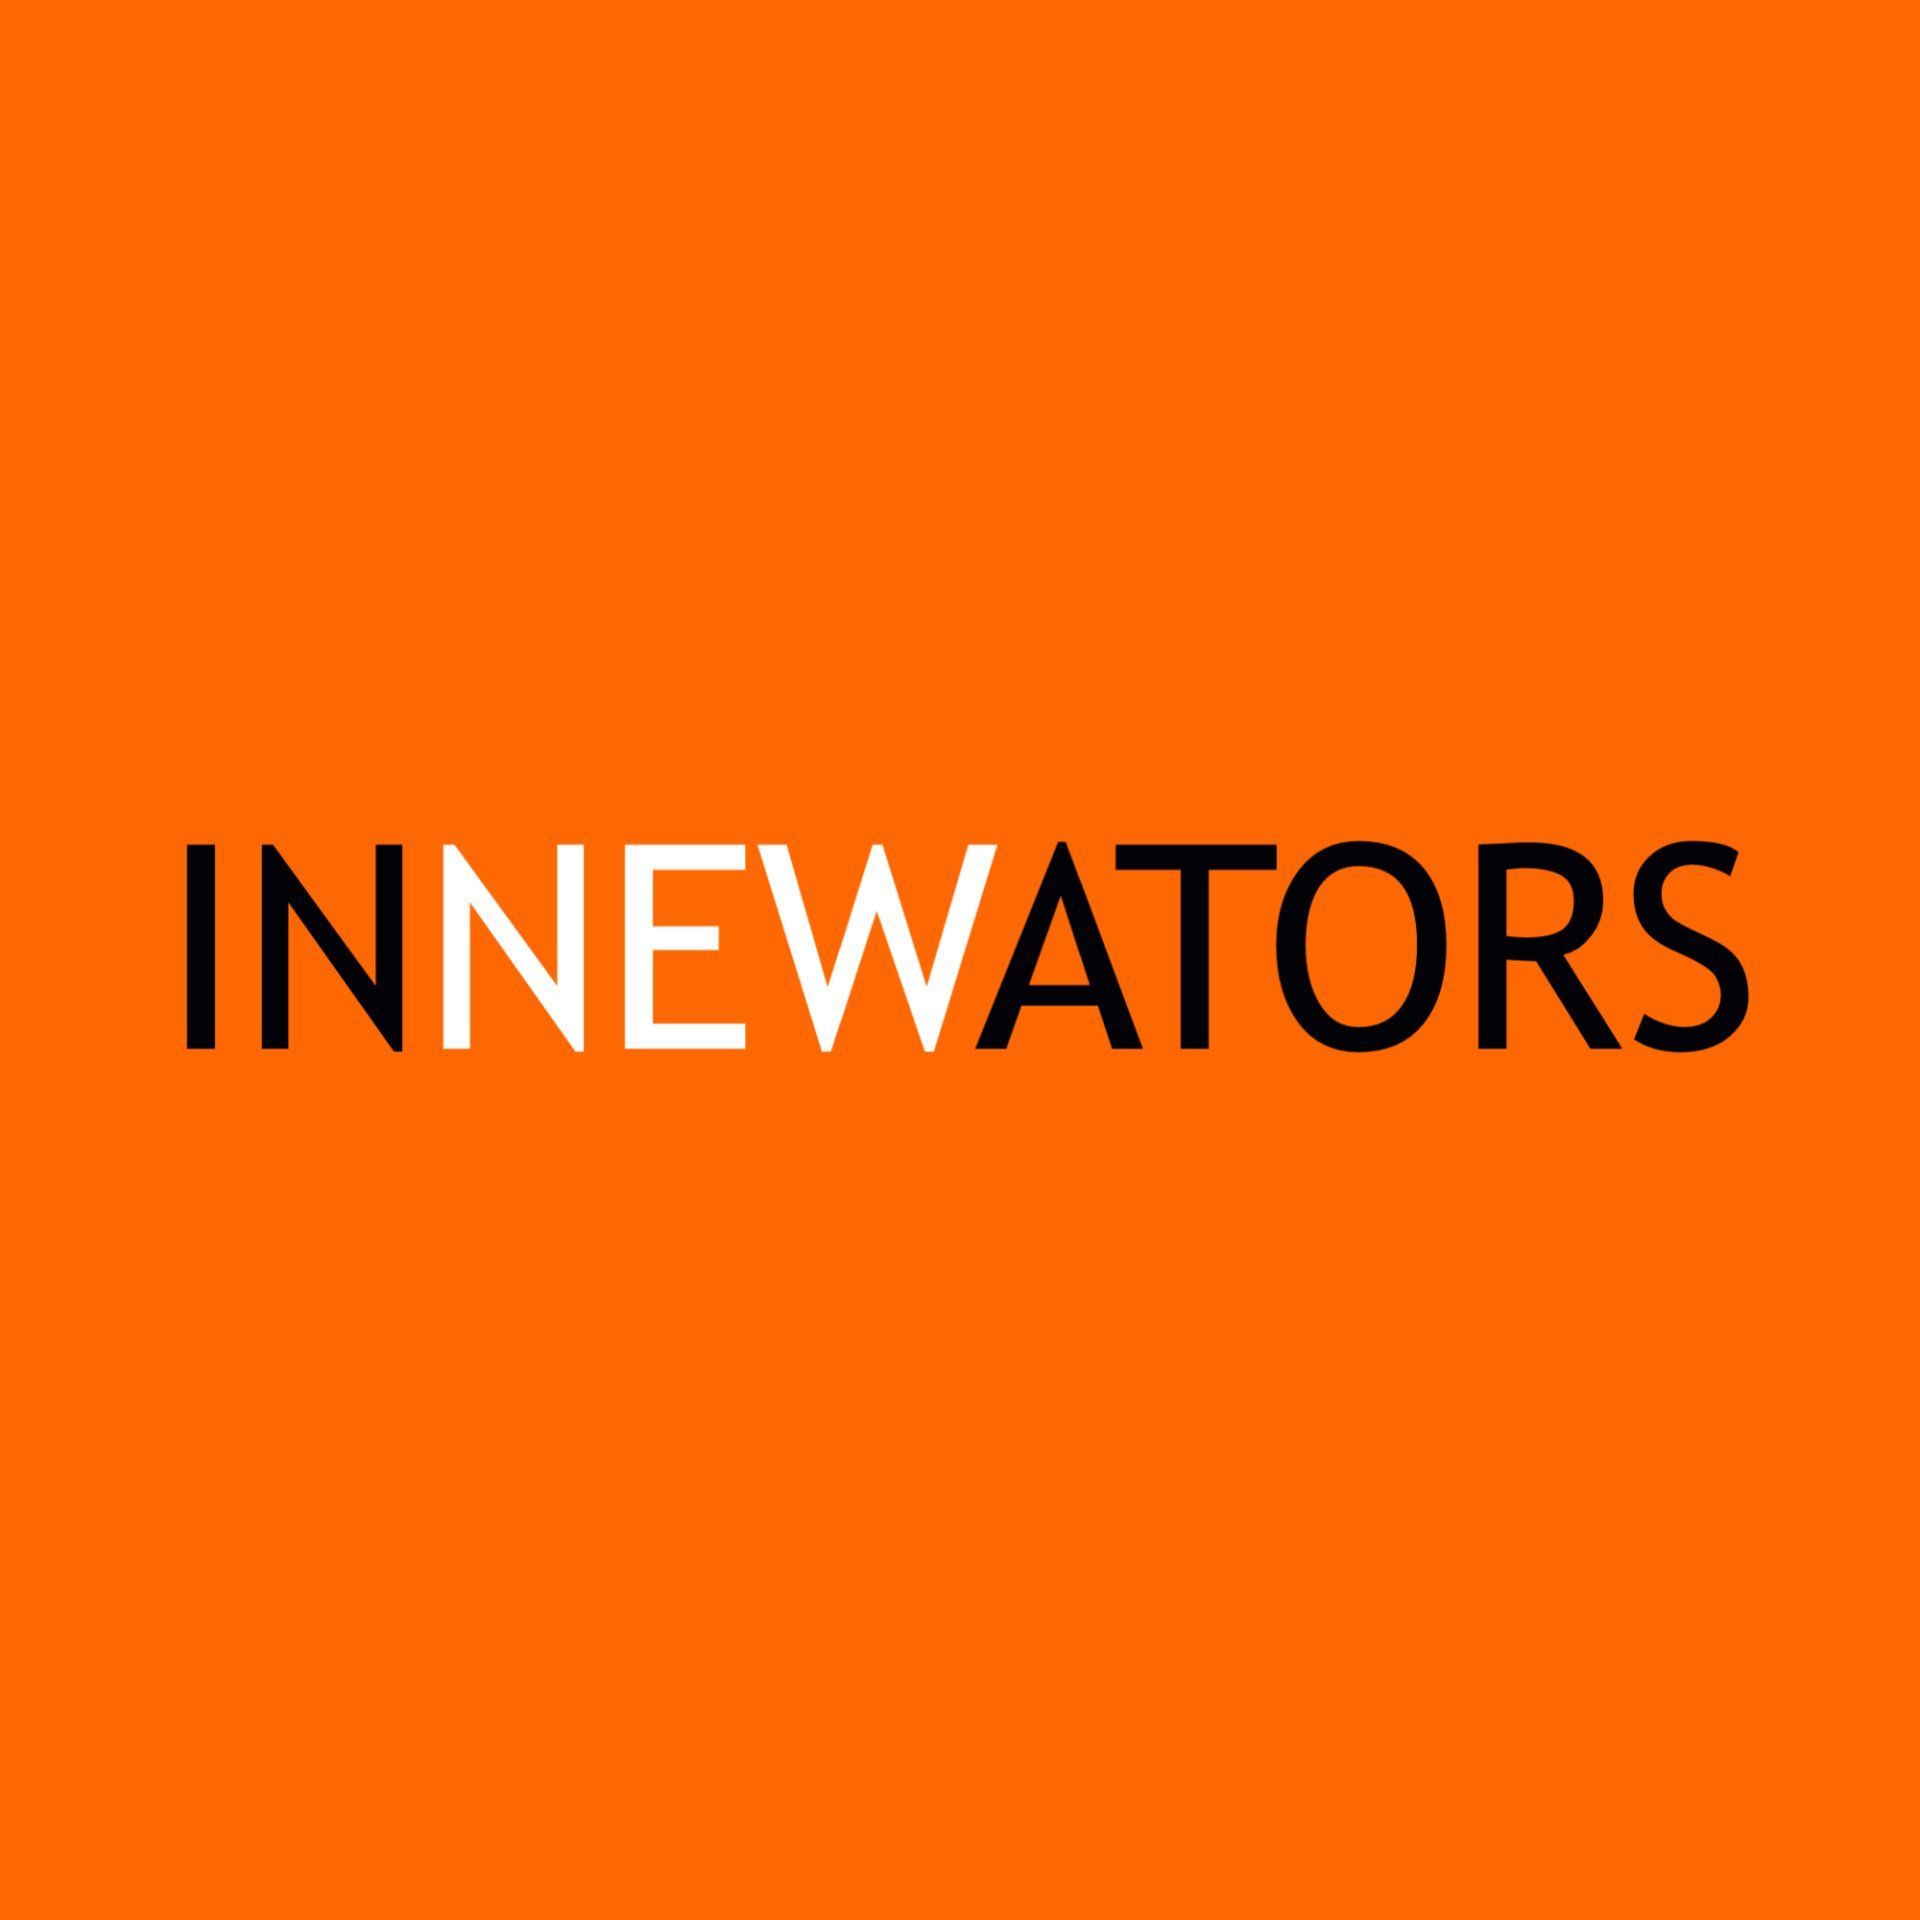 (c) Innewators.com